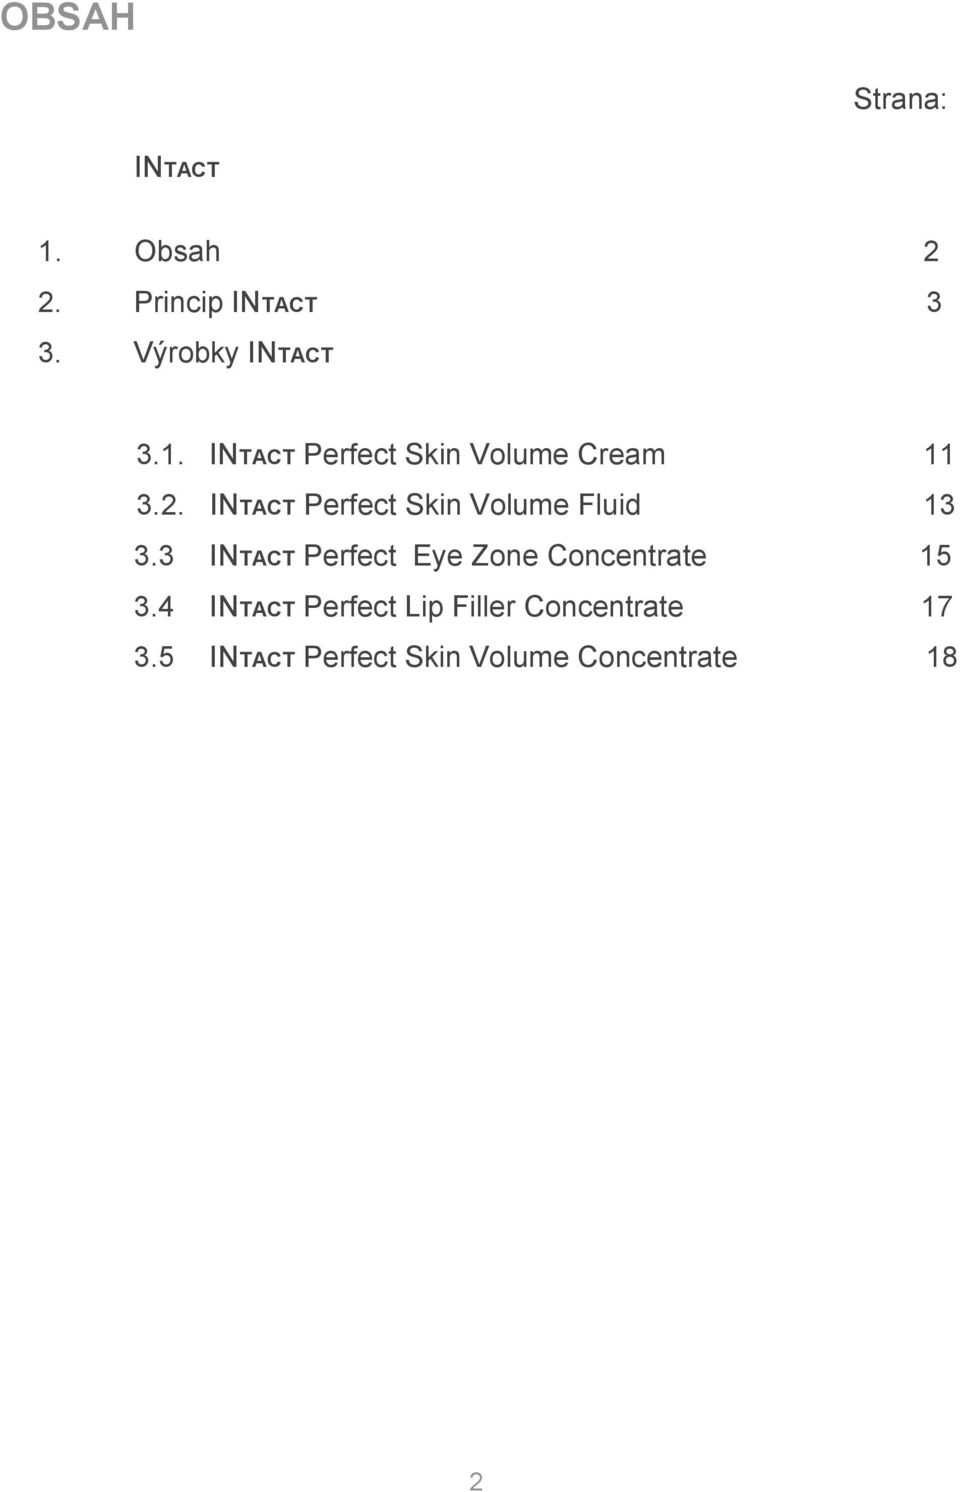 INTACT Perfect Skin Volume Fluid 13 3.